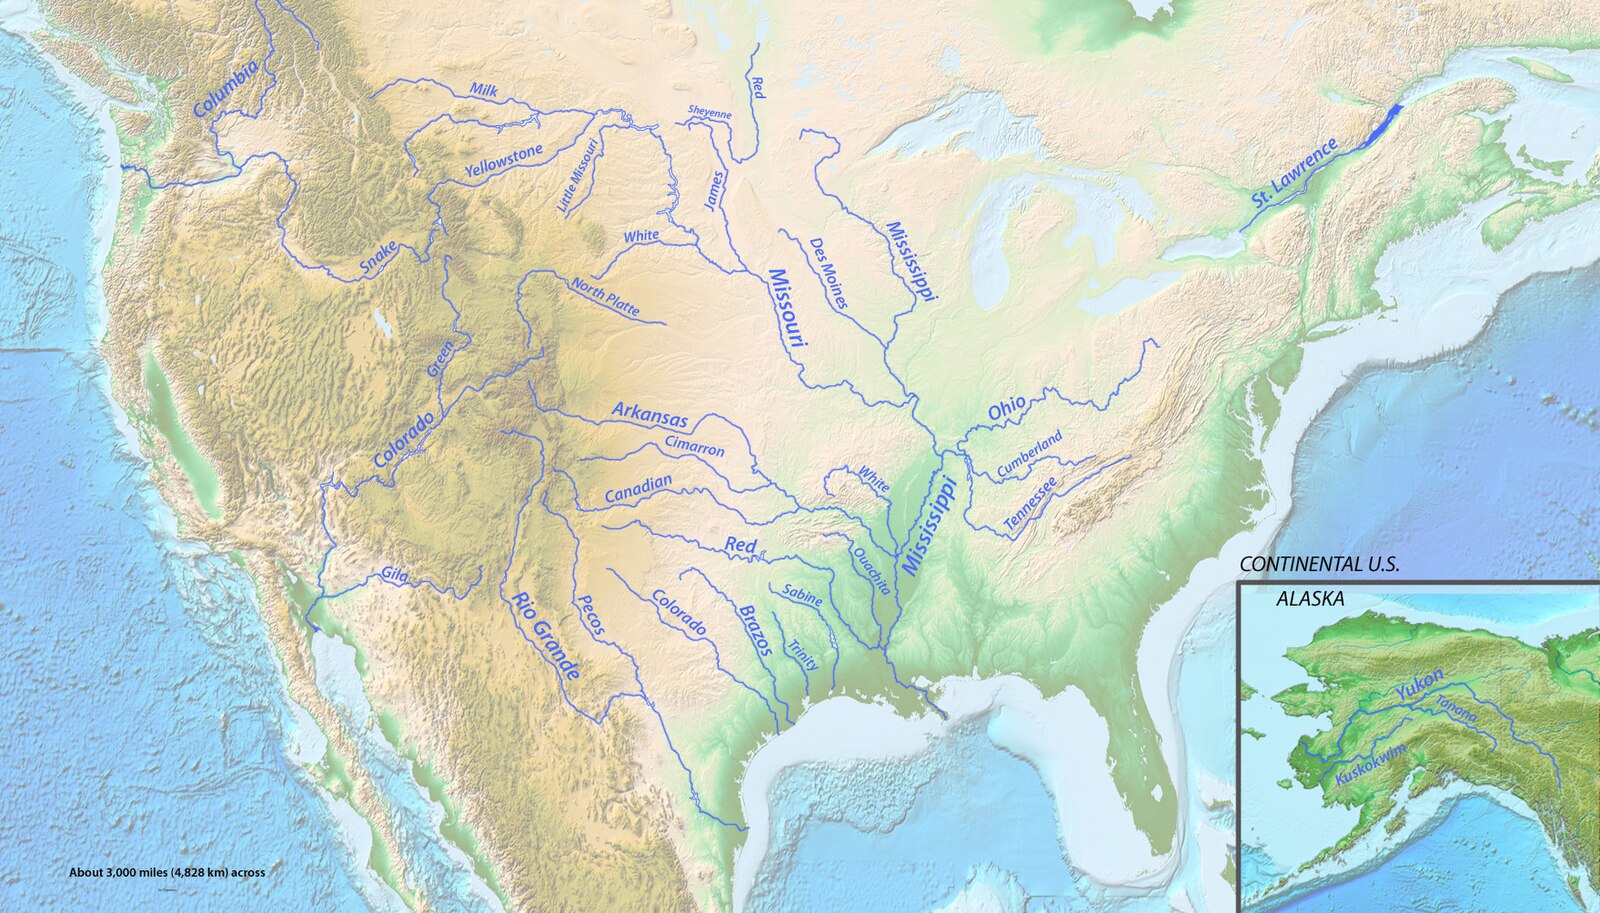 Моря и реки озера северной америки. Пис Ривер река на карте Северной Америки. Карта HTR Северной Америки. Река Бэр Северная Америка на карте. Река Северн на карте Северной Америки.